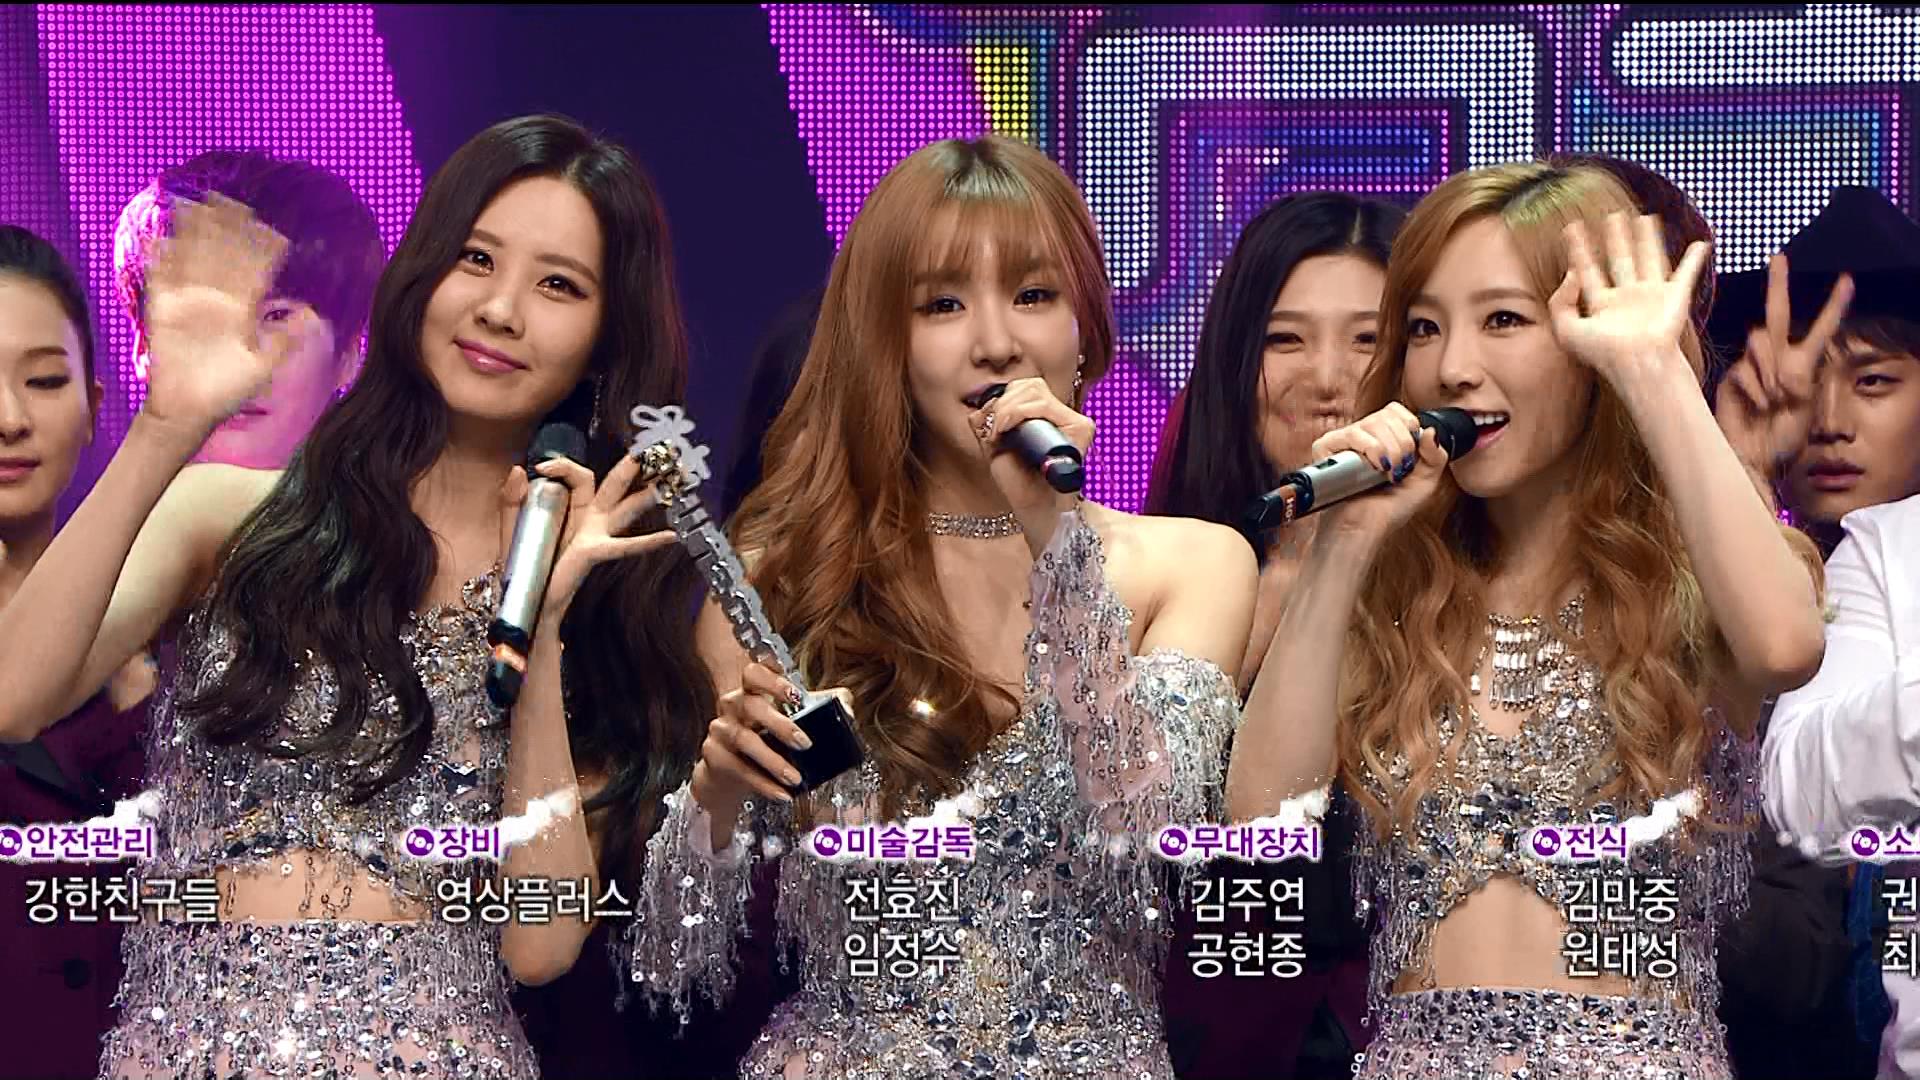 Girls’ Generation – TTS Presenta “Holler” y Ganan Primer Lugar en “Show” Music Core” Ttsmucore